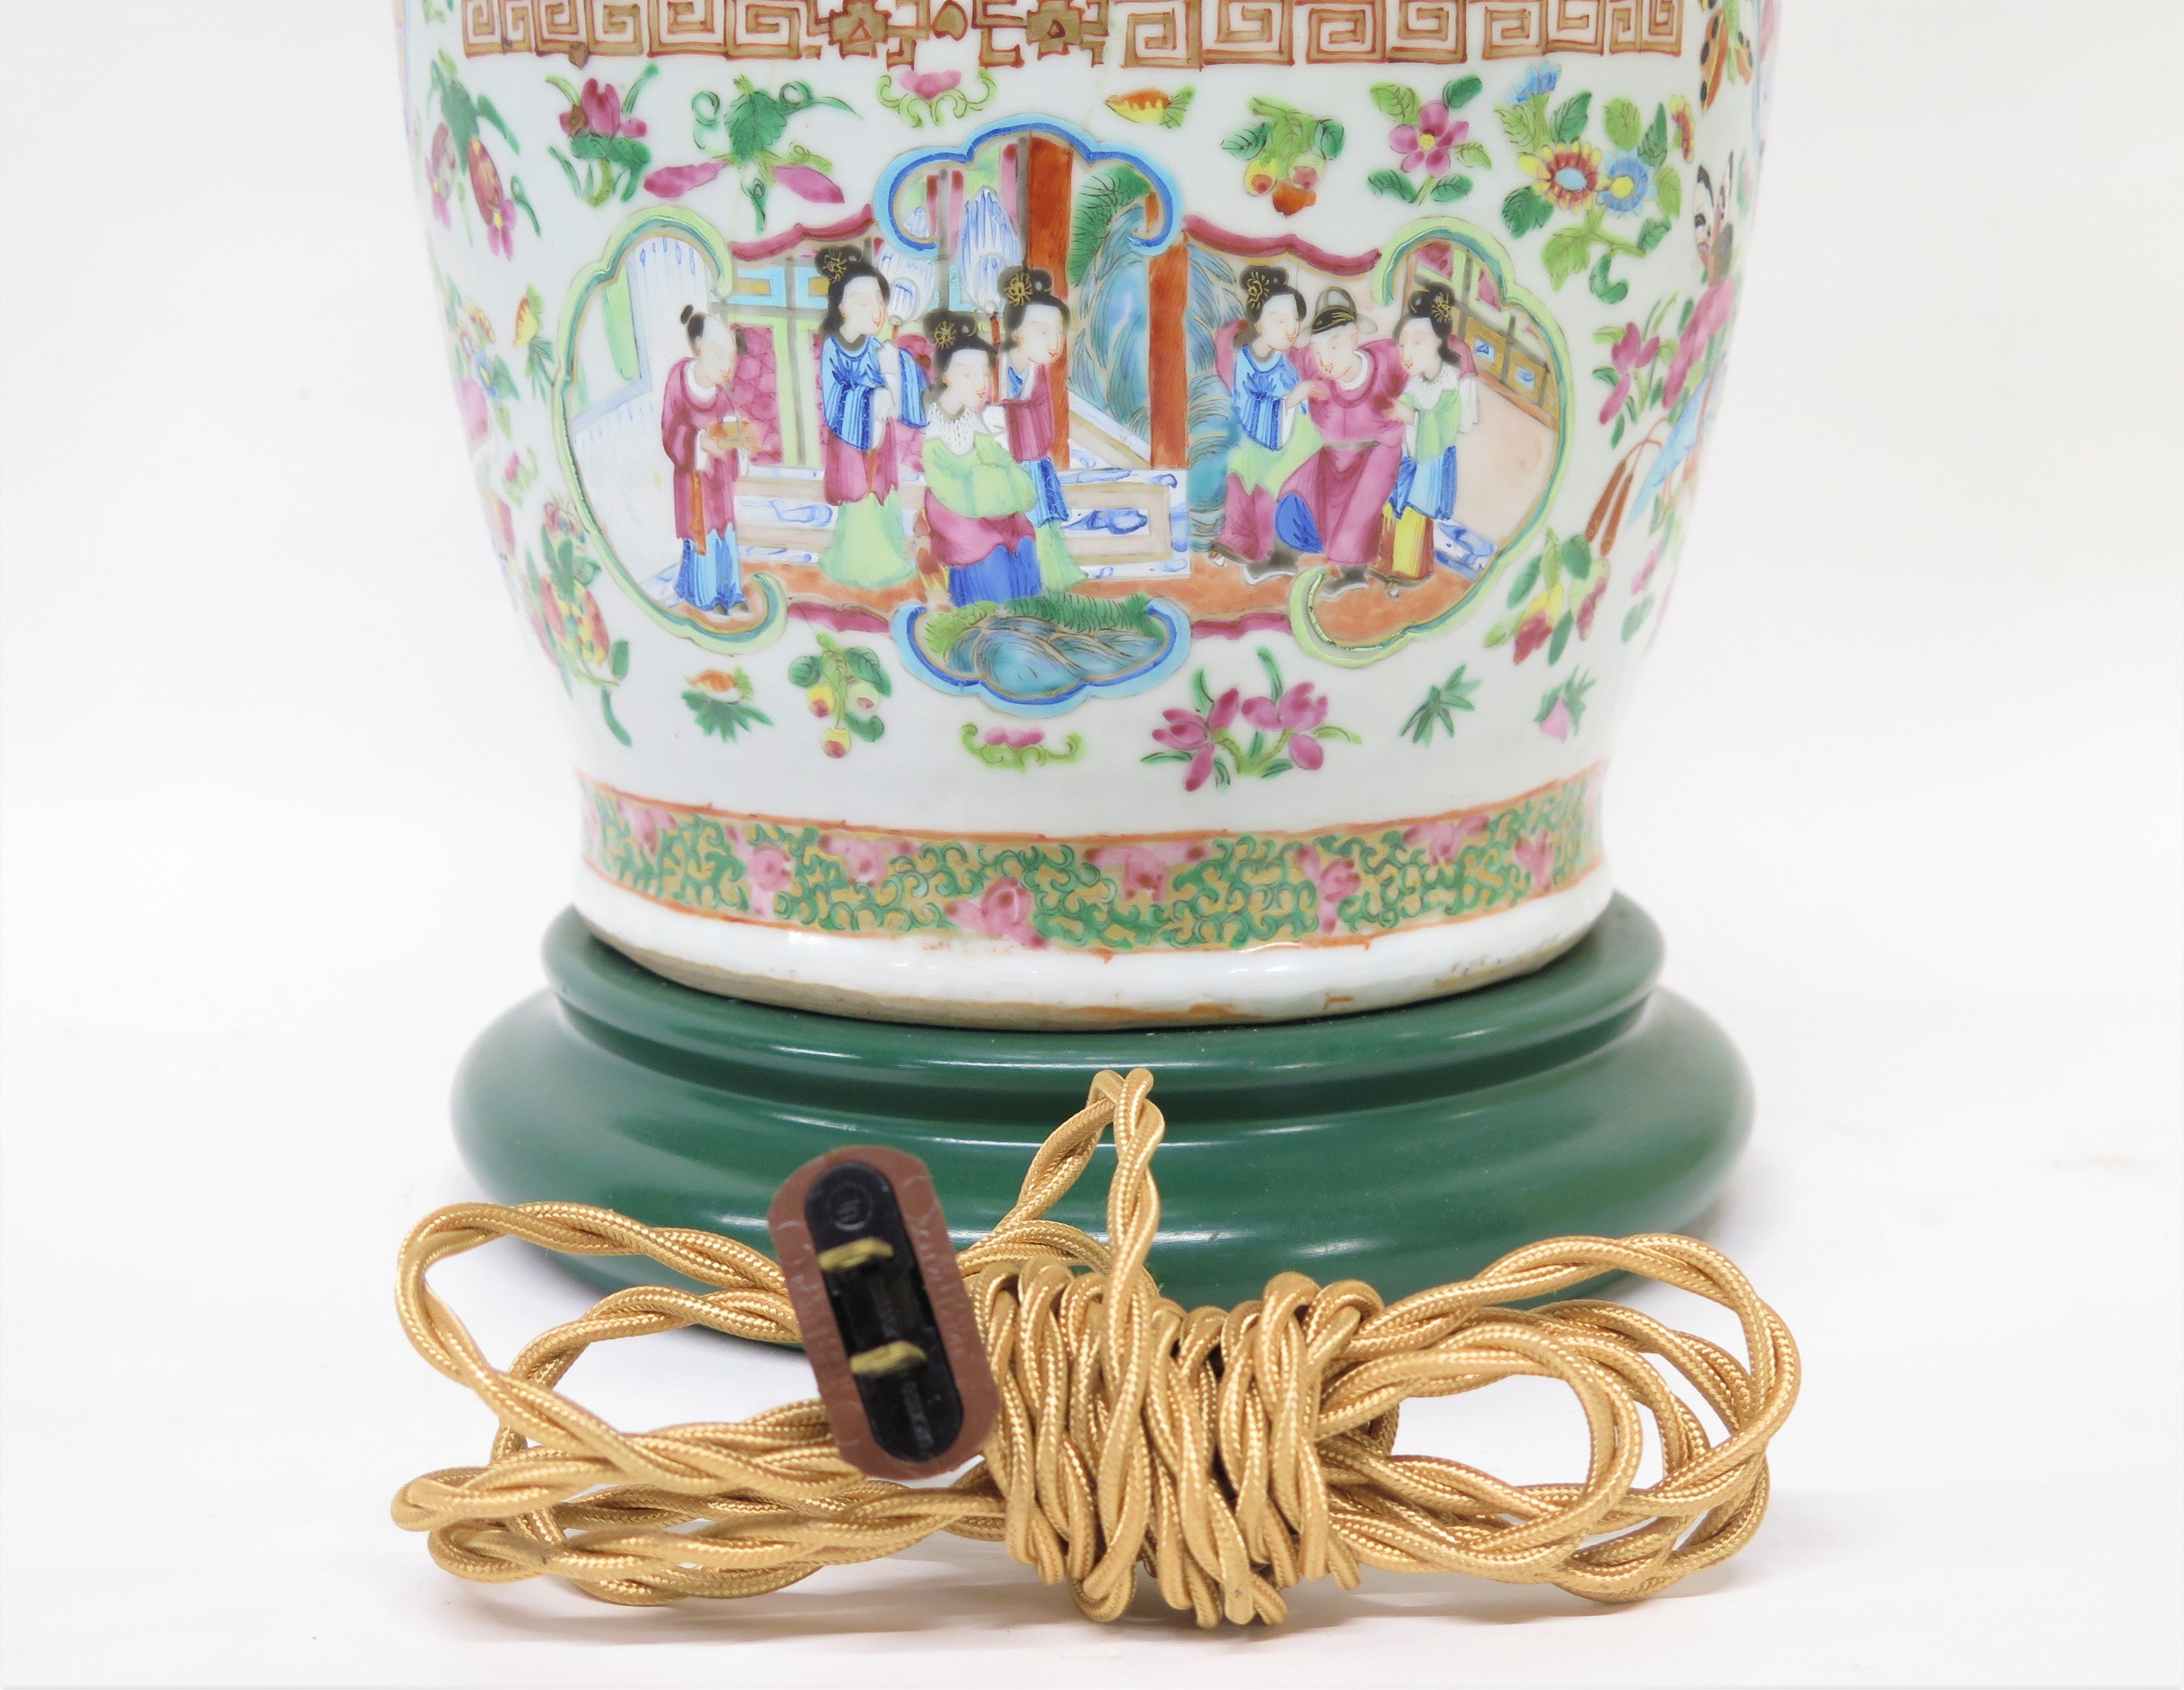 Chinese Export Porcelain Rose Medallion Vase as Lamp ( Custom Shade sold separately )